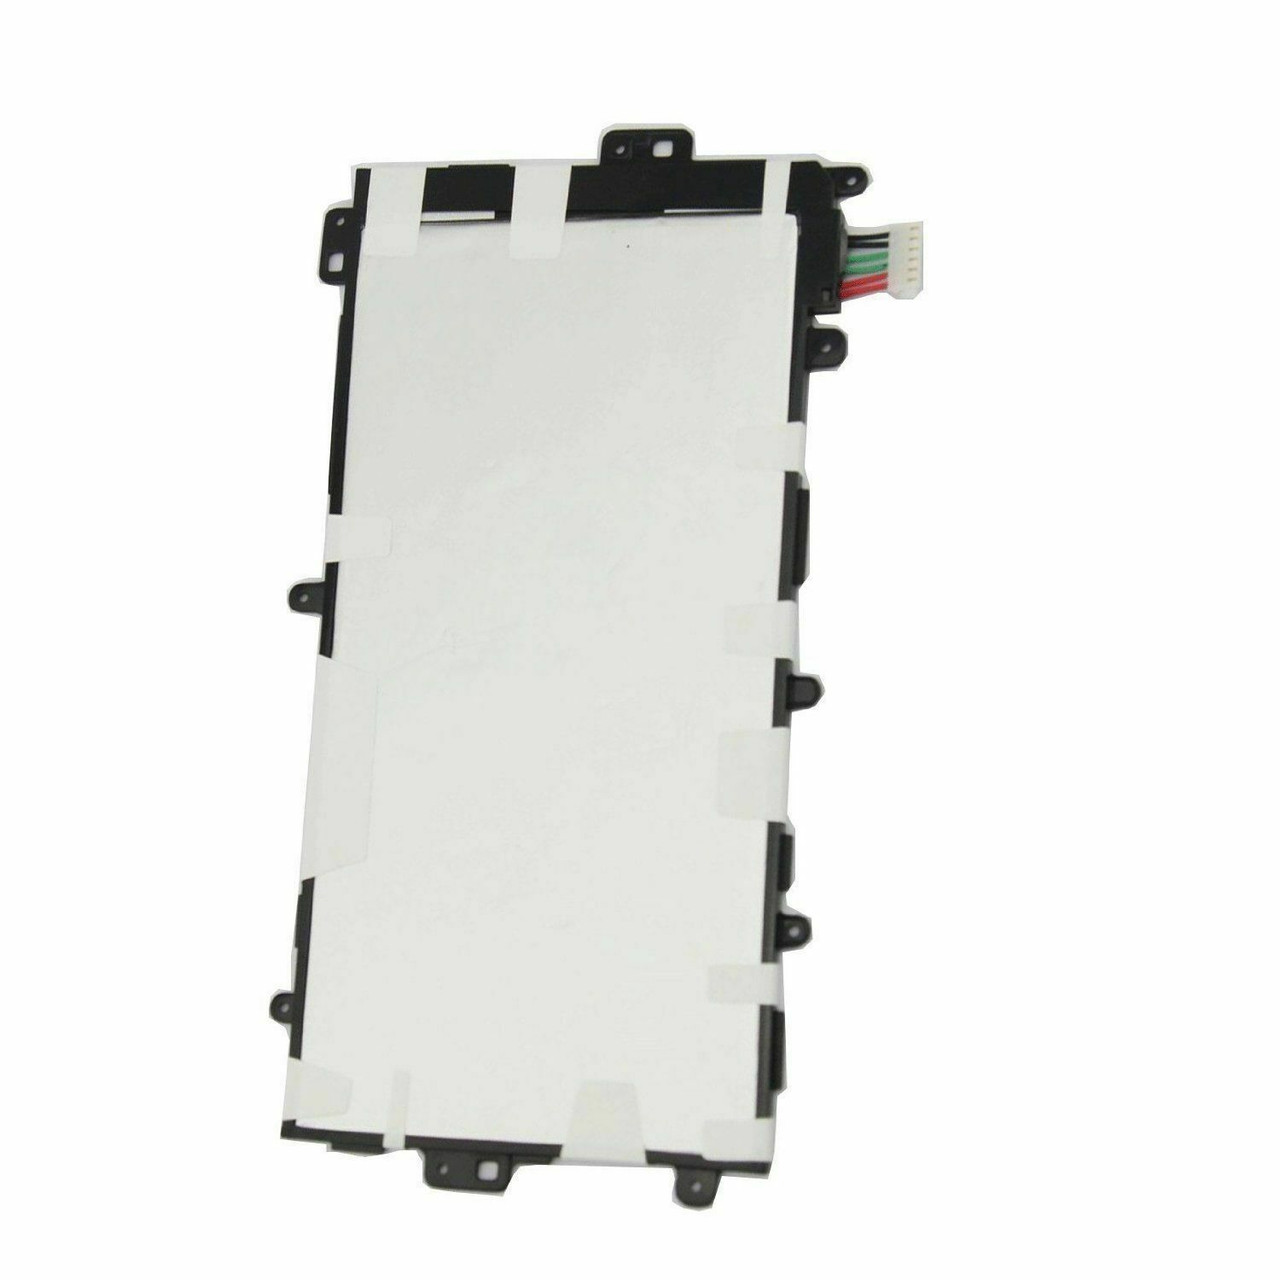 OEM SPEC 4000mAh Battery For Samsung GALAXY TAB 4 7.0 SM-T230 T230 EB-BT230FBE